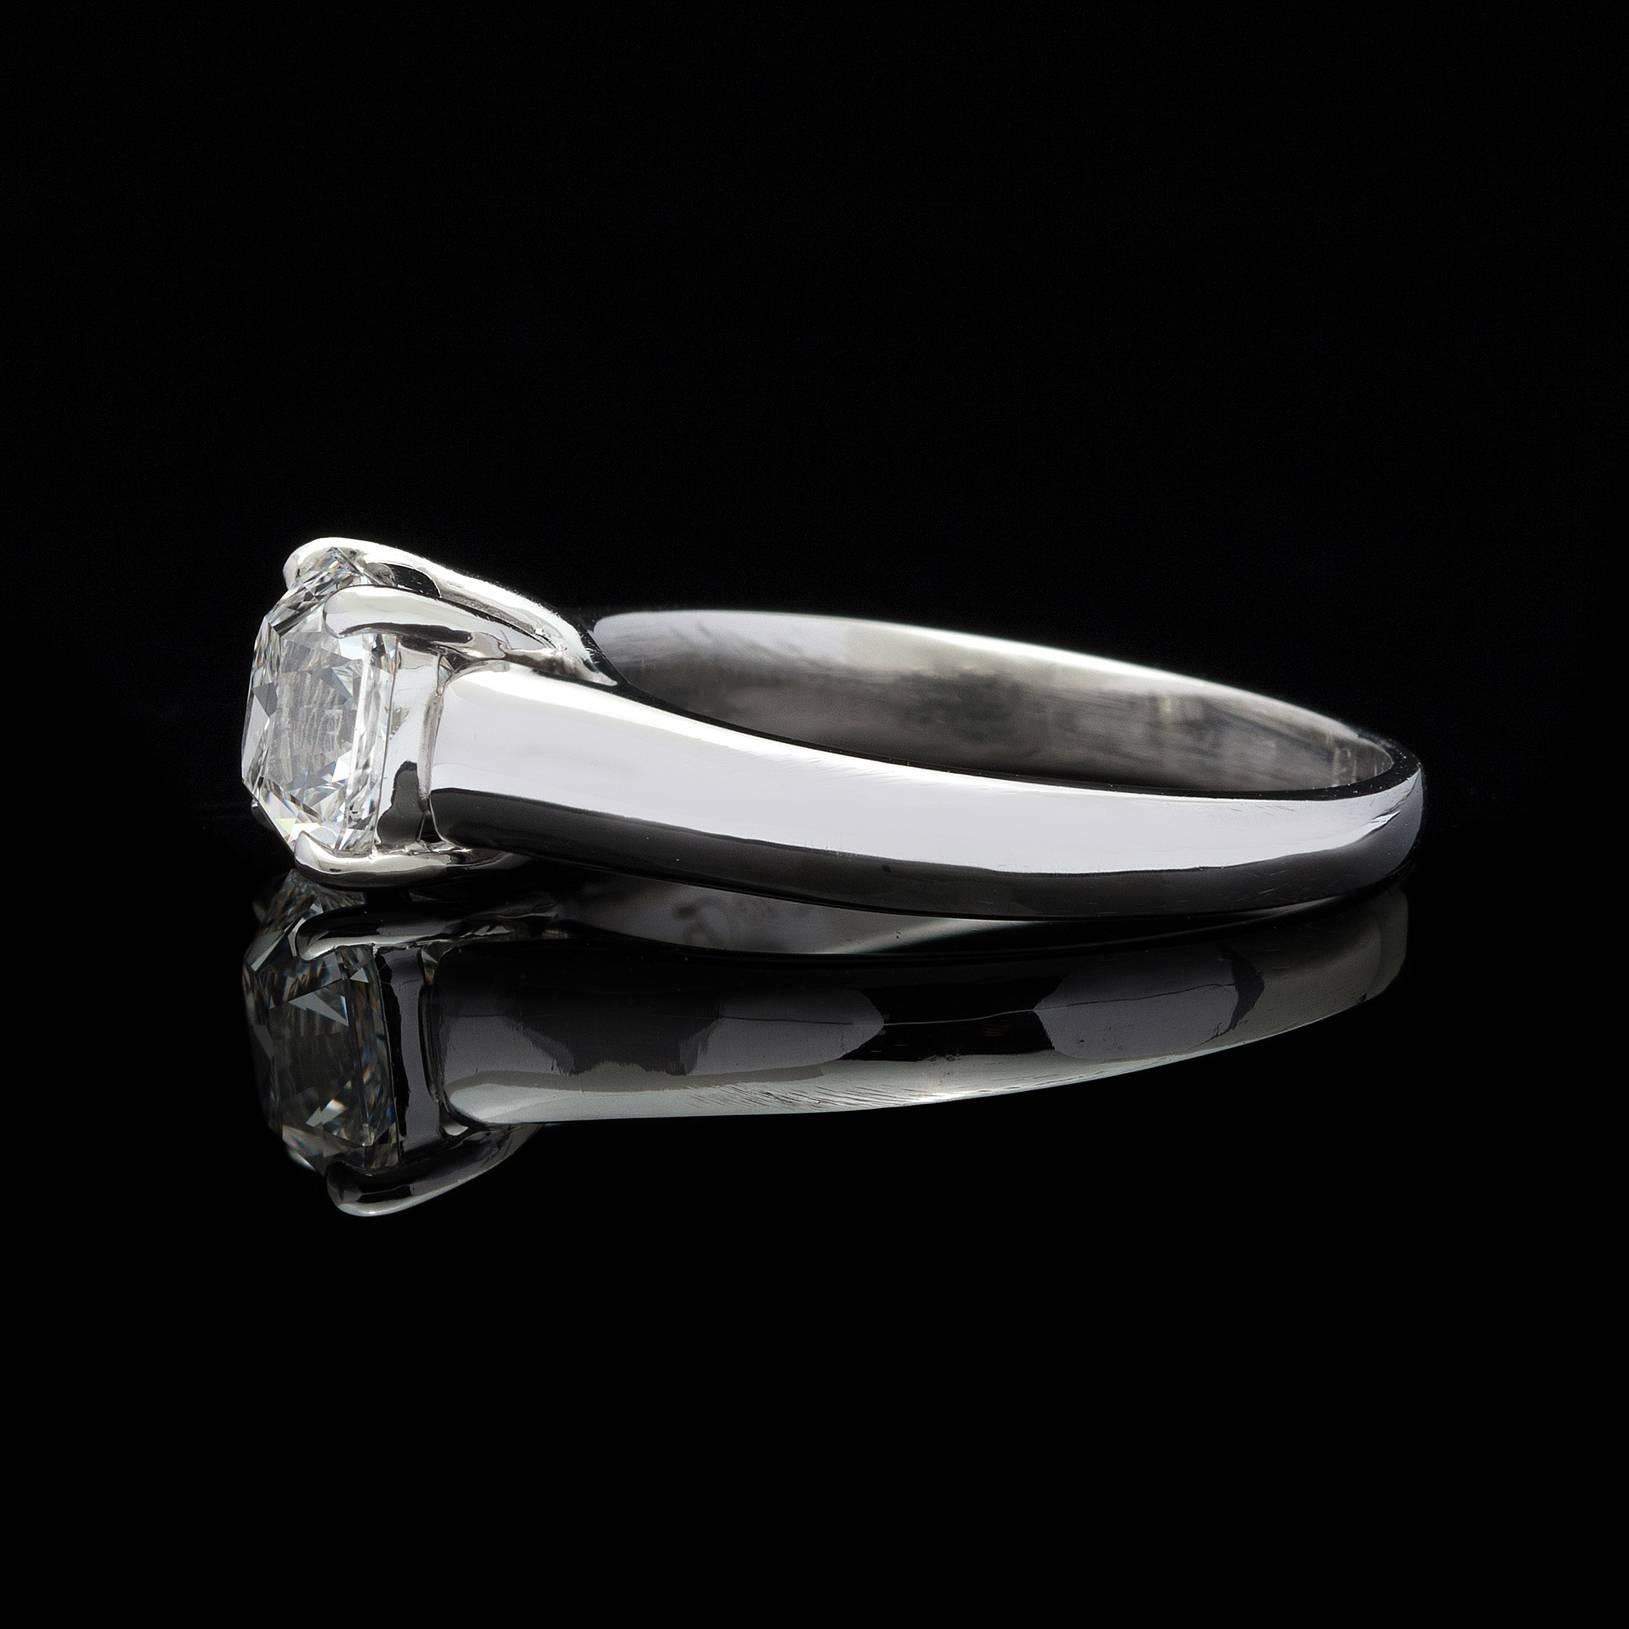 1.42 carat diamond ring